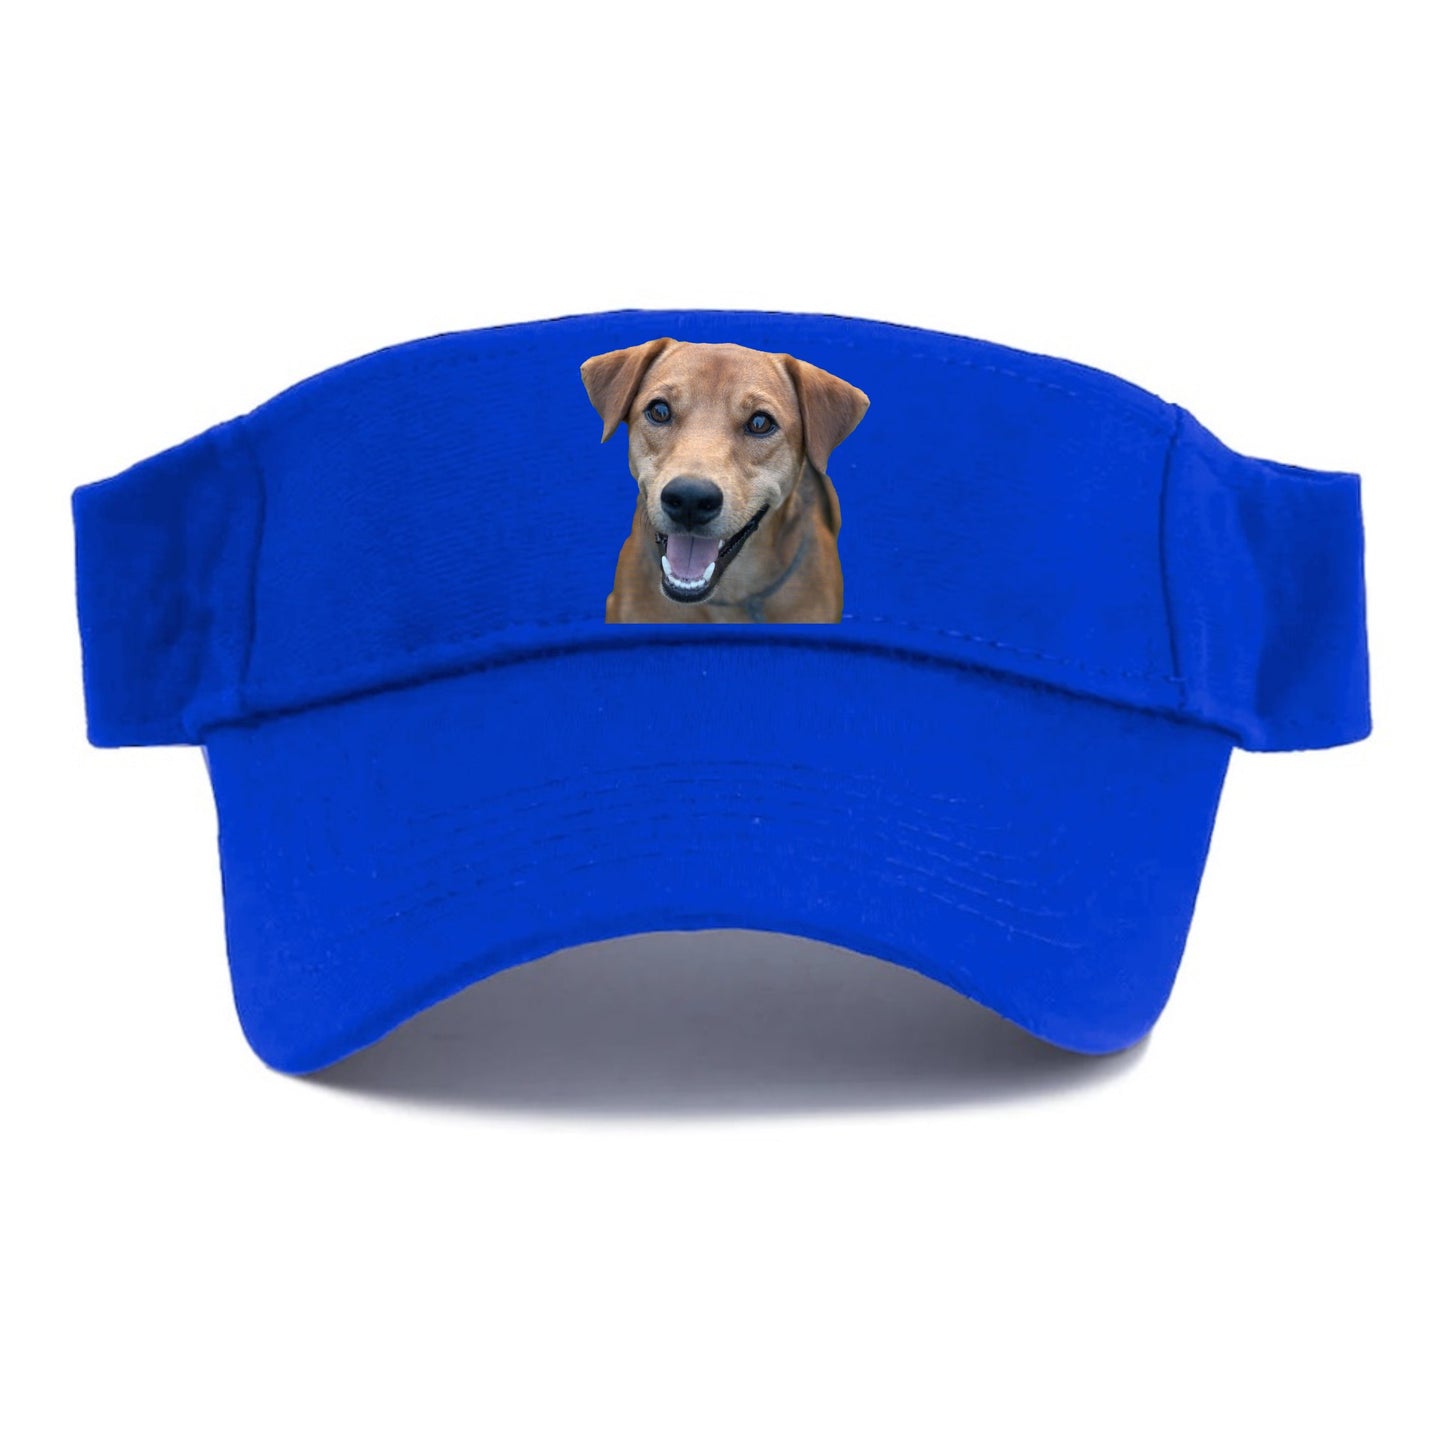 Labrador Hat